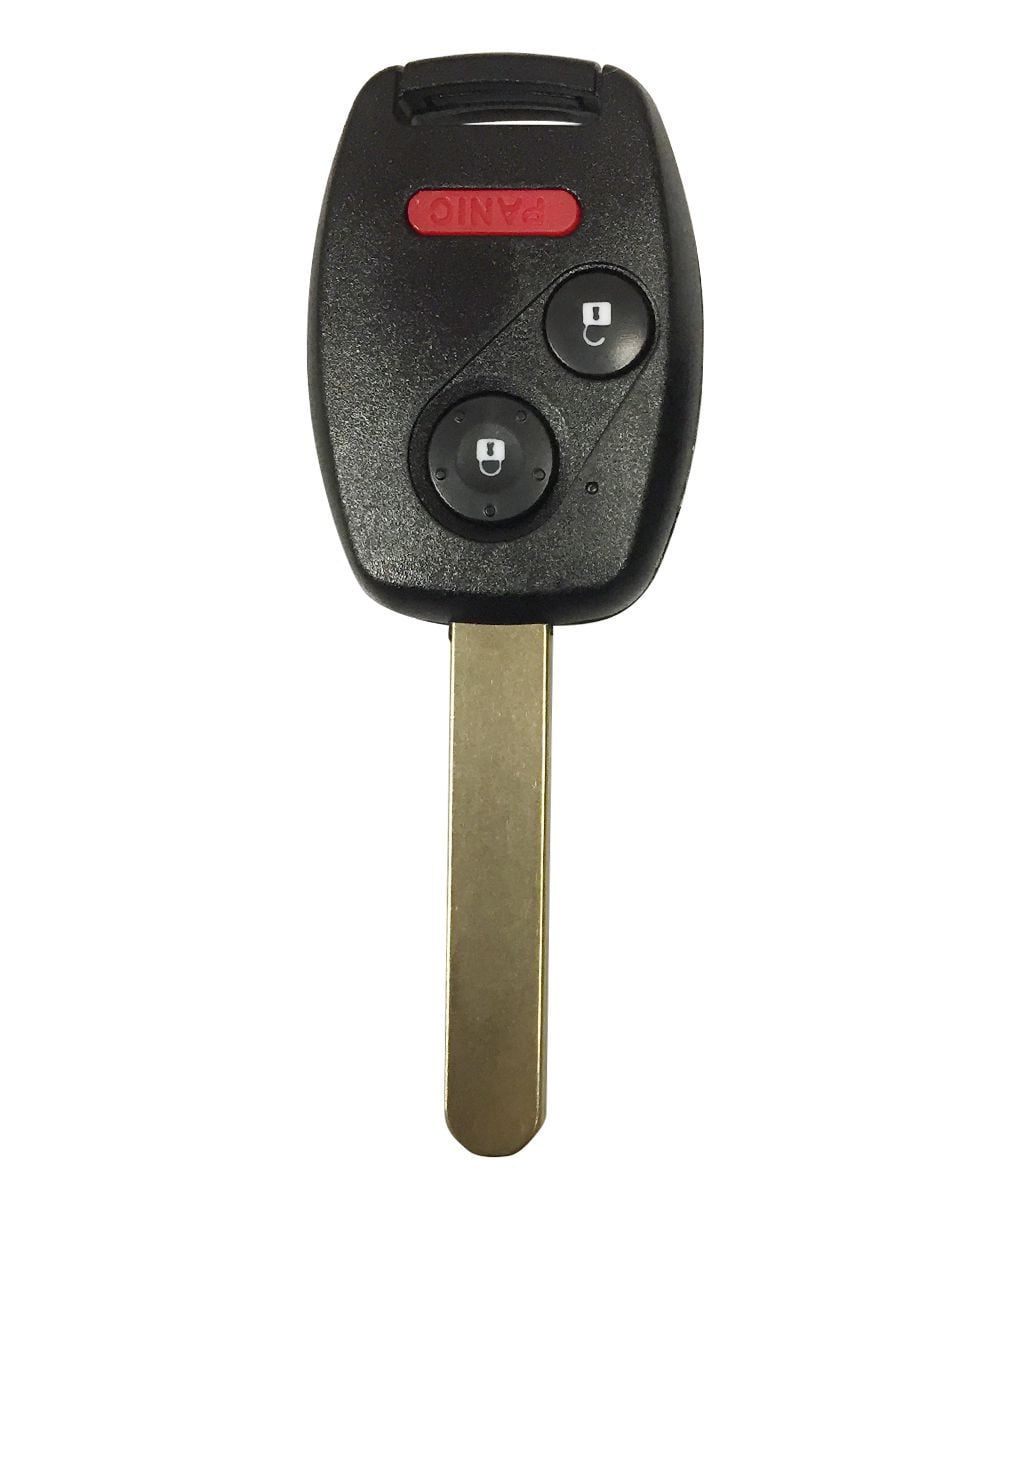 2 For 2009 2010 2011 2012 2013 2014 Honda Fit Keyless Entry Remote Car Key Fob 